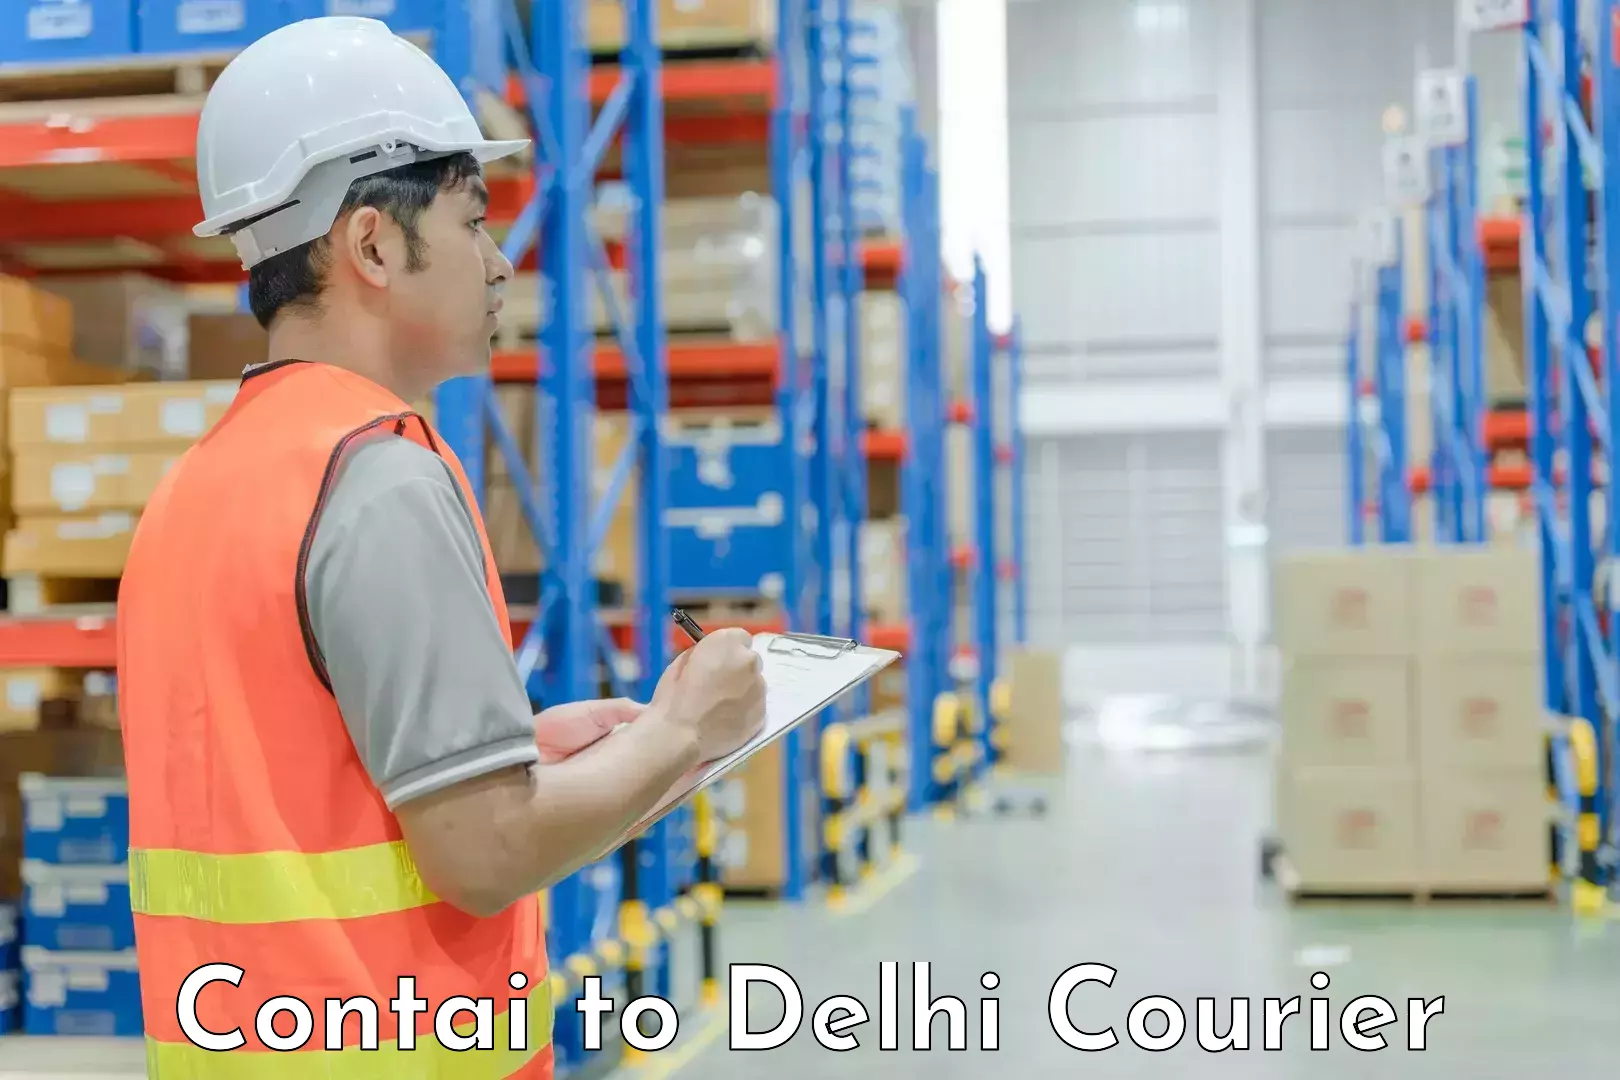 Professional moving company Contai to University of Delhi